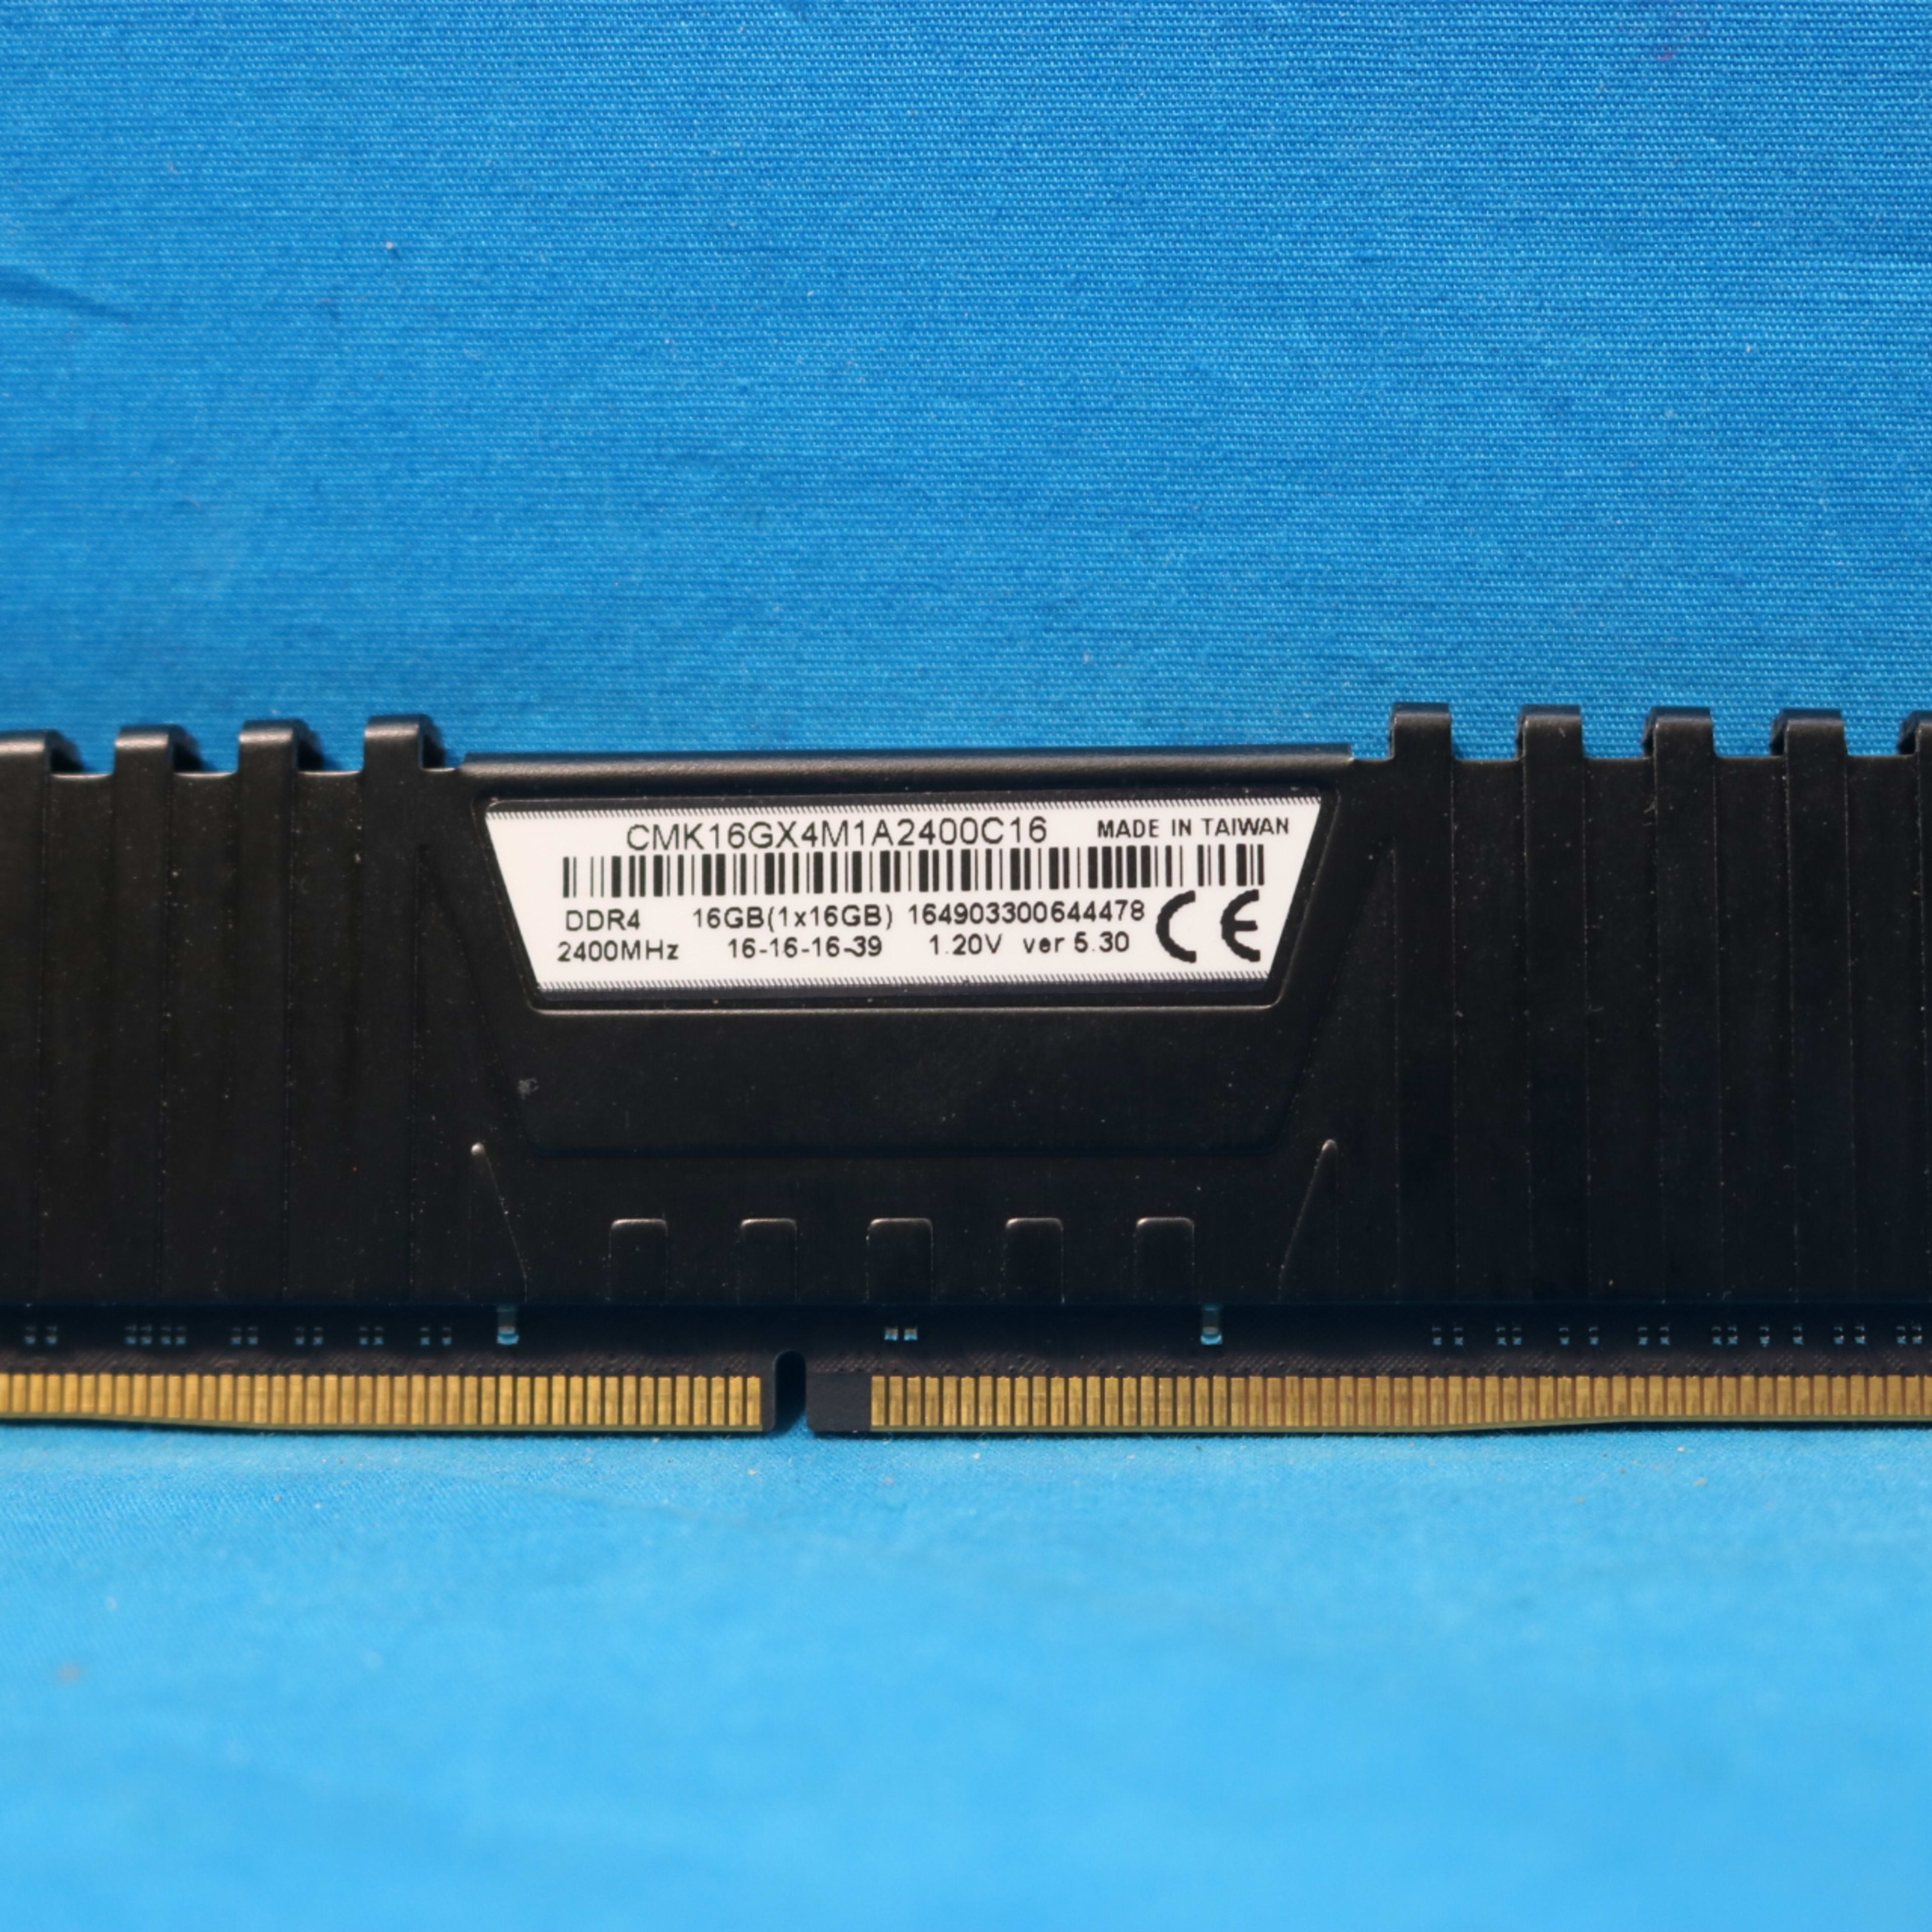 Corsair Vengeance LPX 16GB DDR4 3200MHz CL16 Dual Channel Kit (2x 8GB),  Black - PC4-25600 DDR4 3200 - Memory Express Inc.